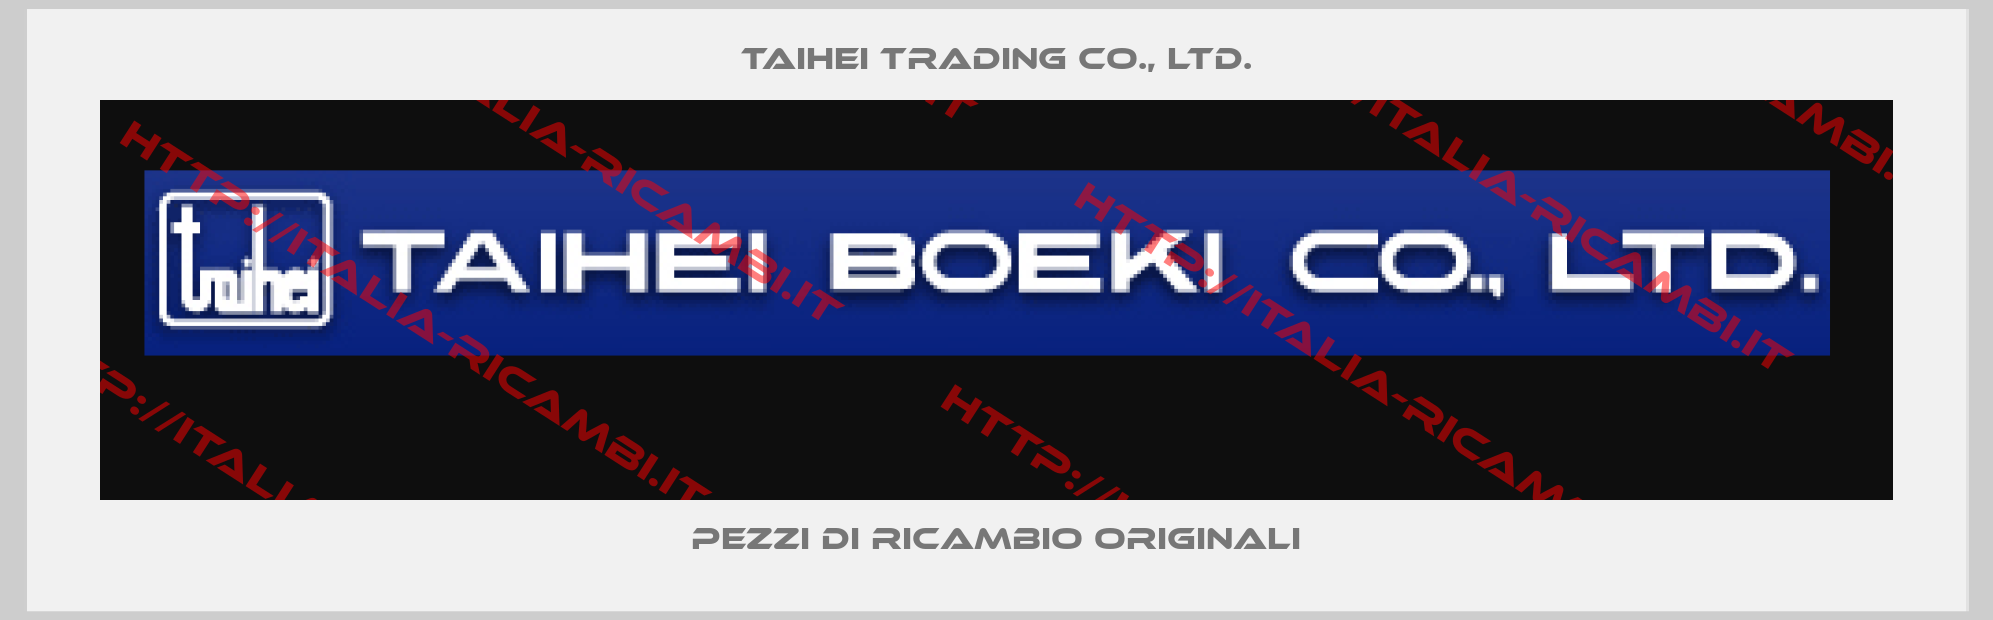 Taihei Trading Co., Ltd.